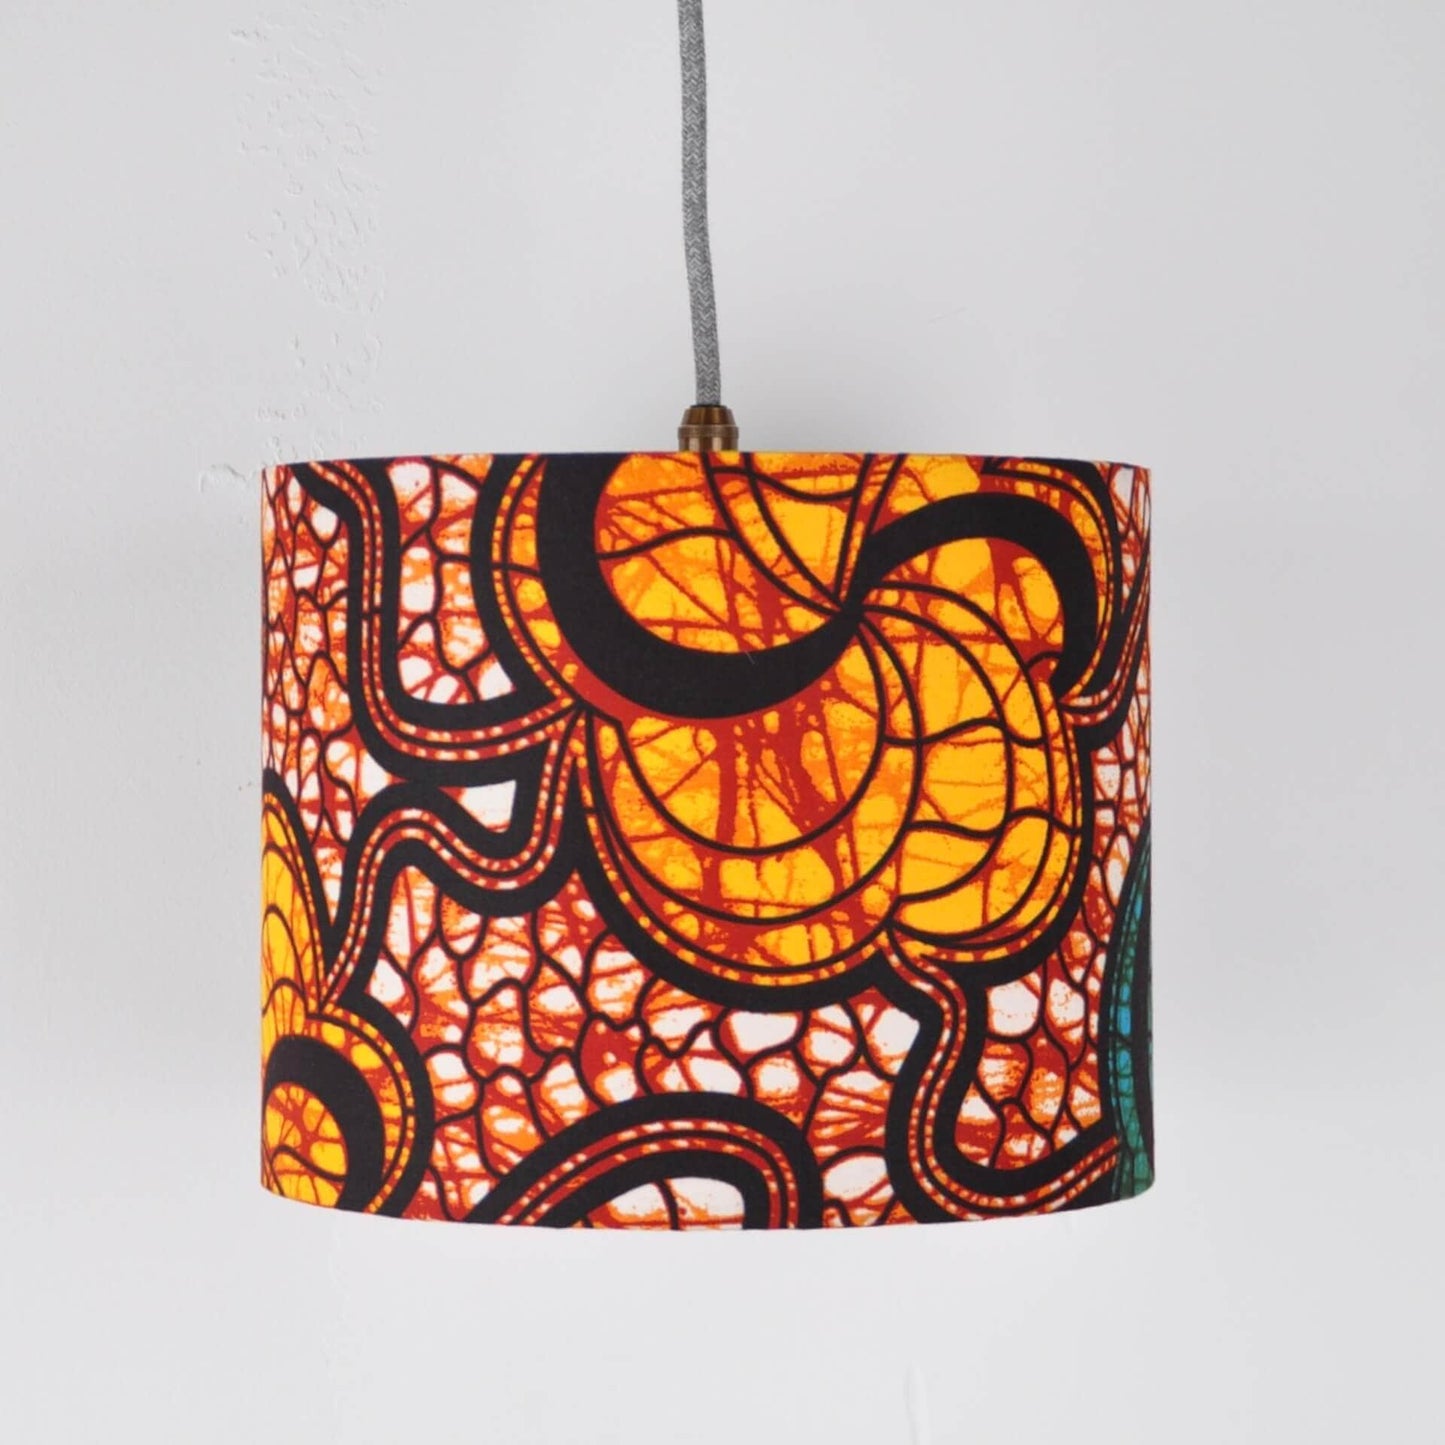 Colourful Shadez Bristol ⌀ 25cm x H 20cm African Print Lampshade - Teal & Orange Flower Swirls (various sizes)